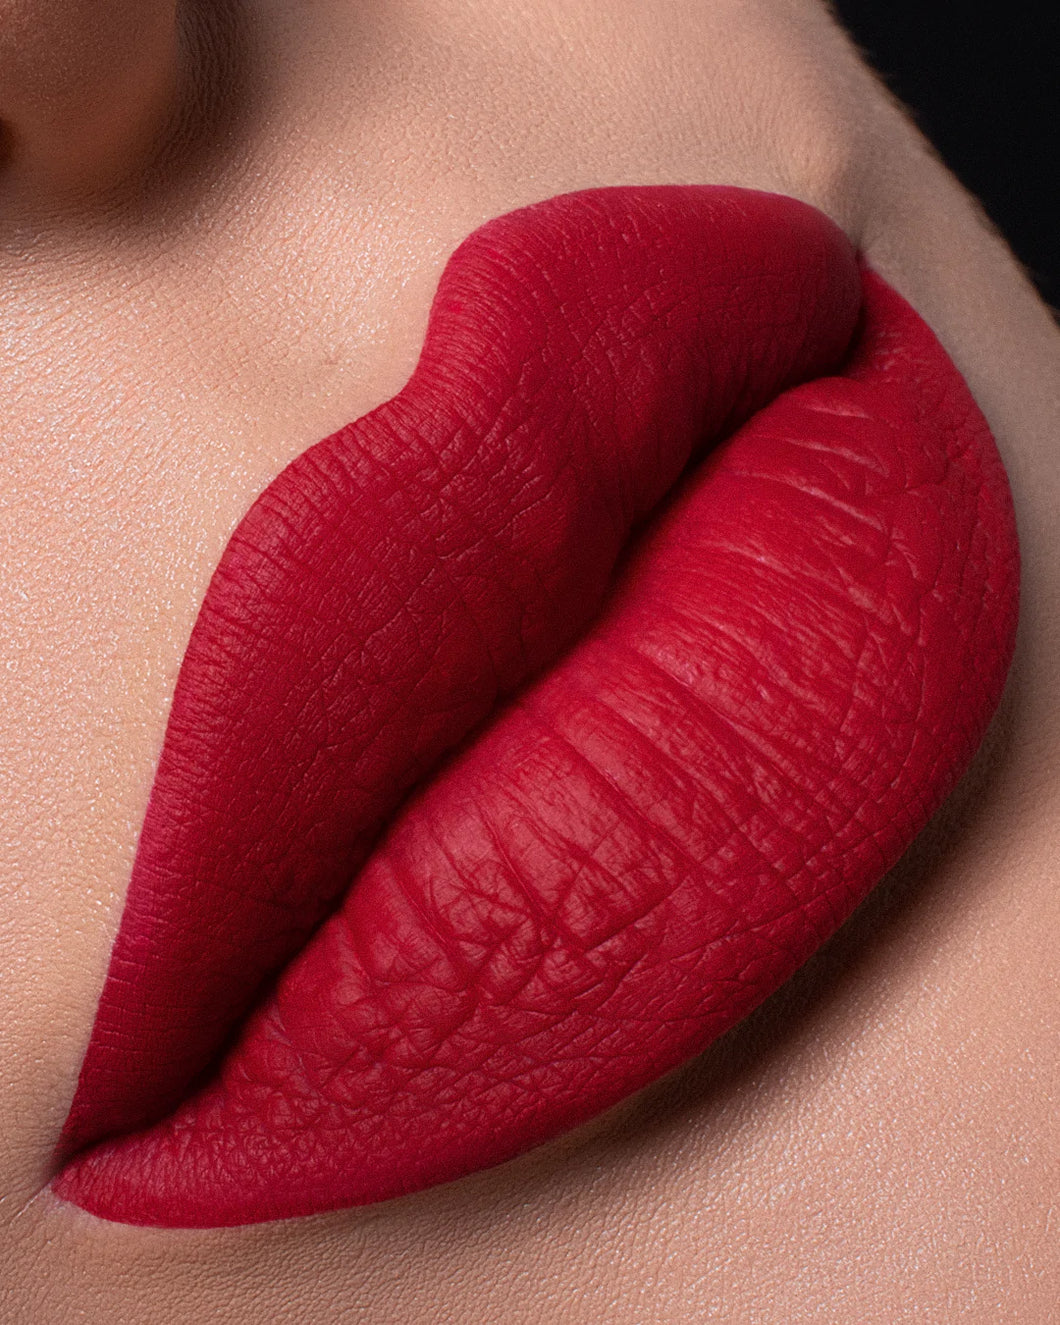 DIVO Intense Red Lipstick by Agustin Fernandez